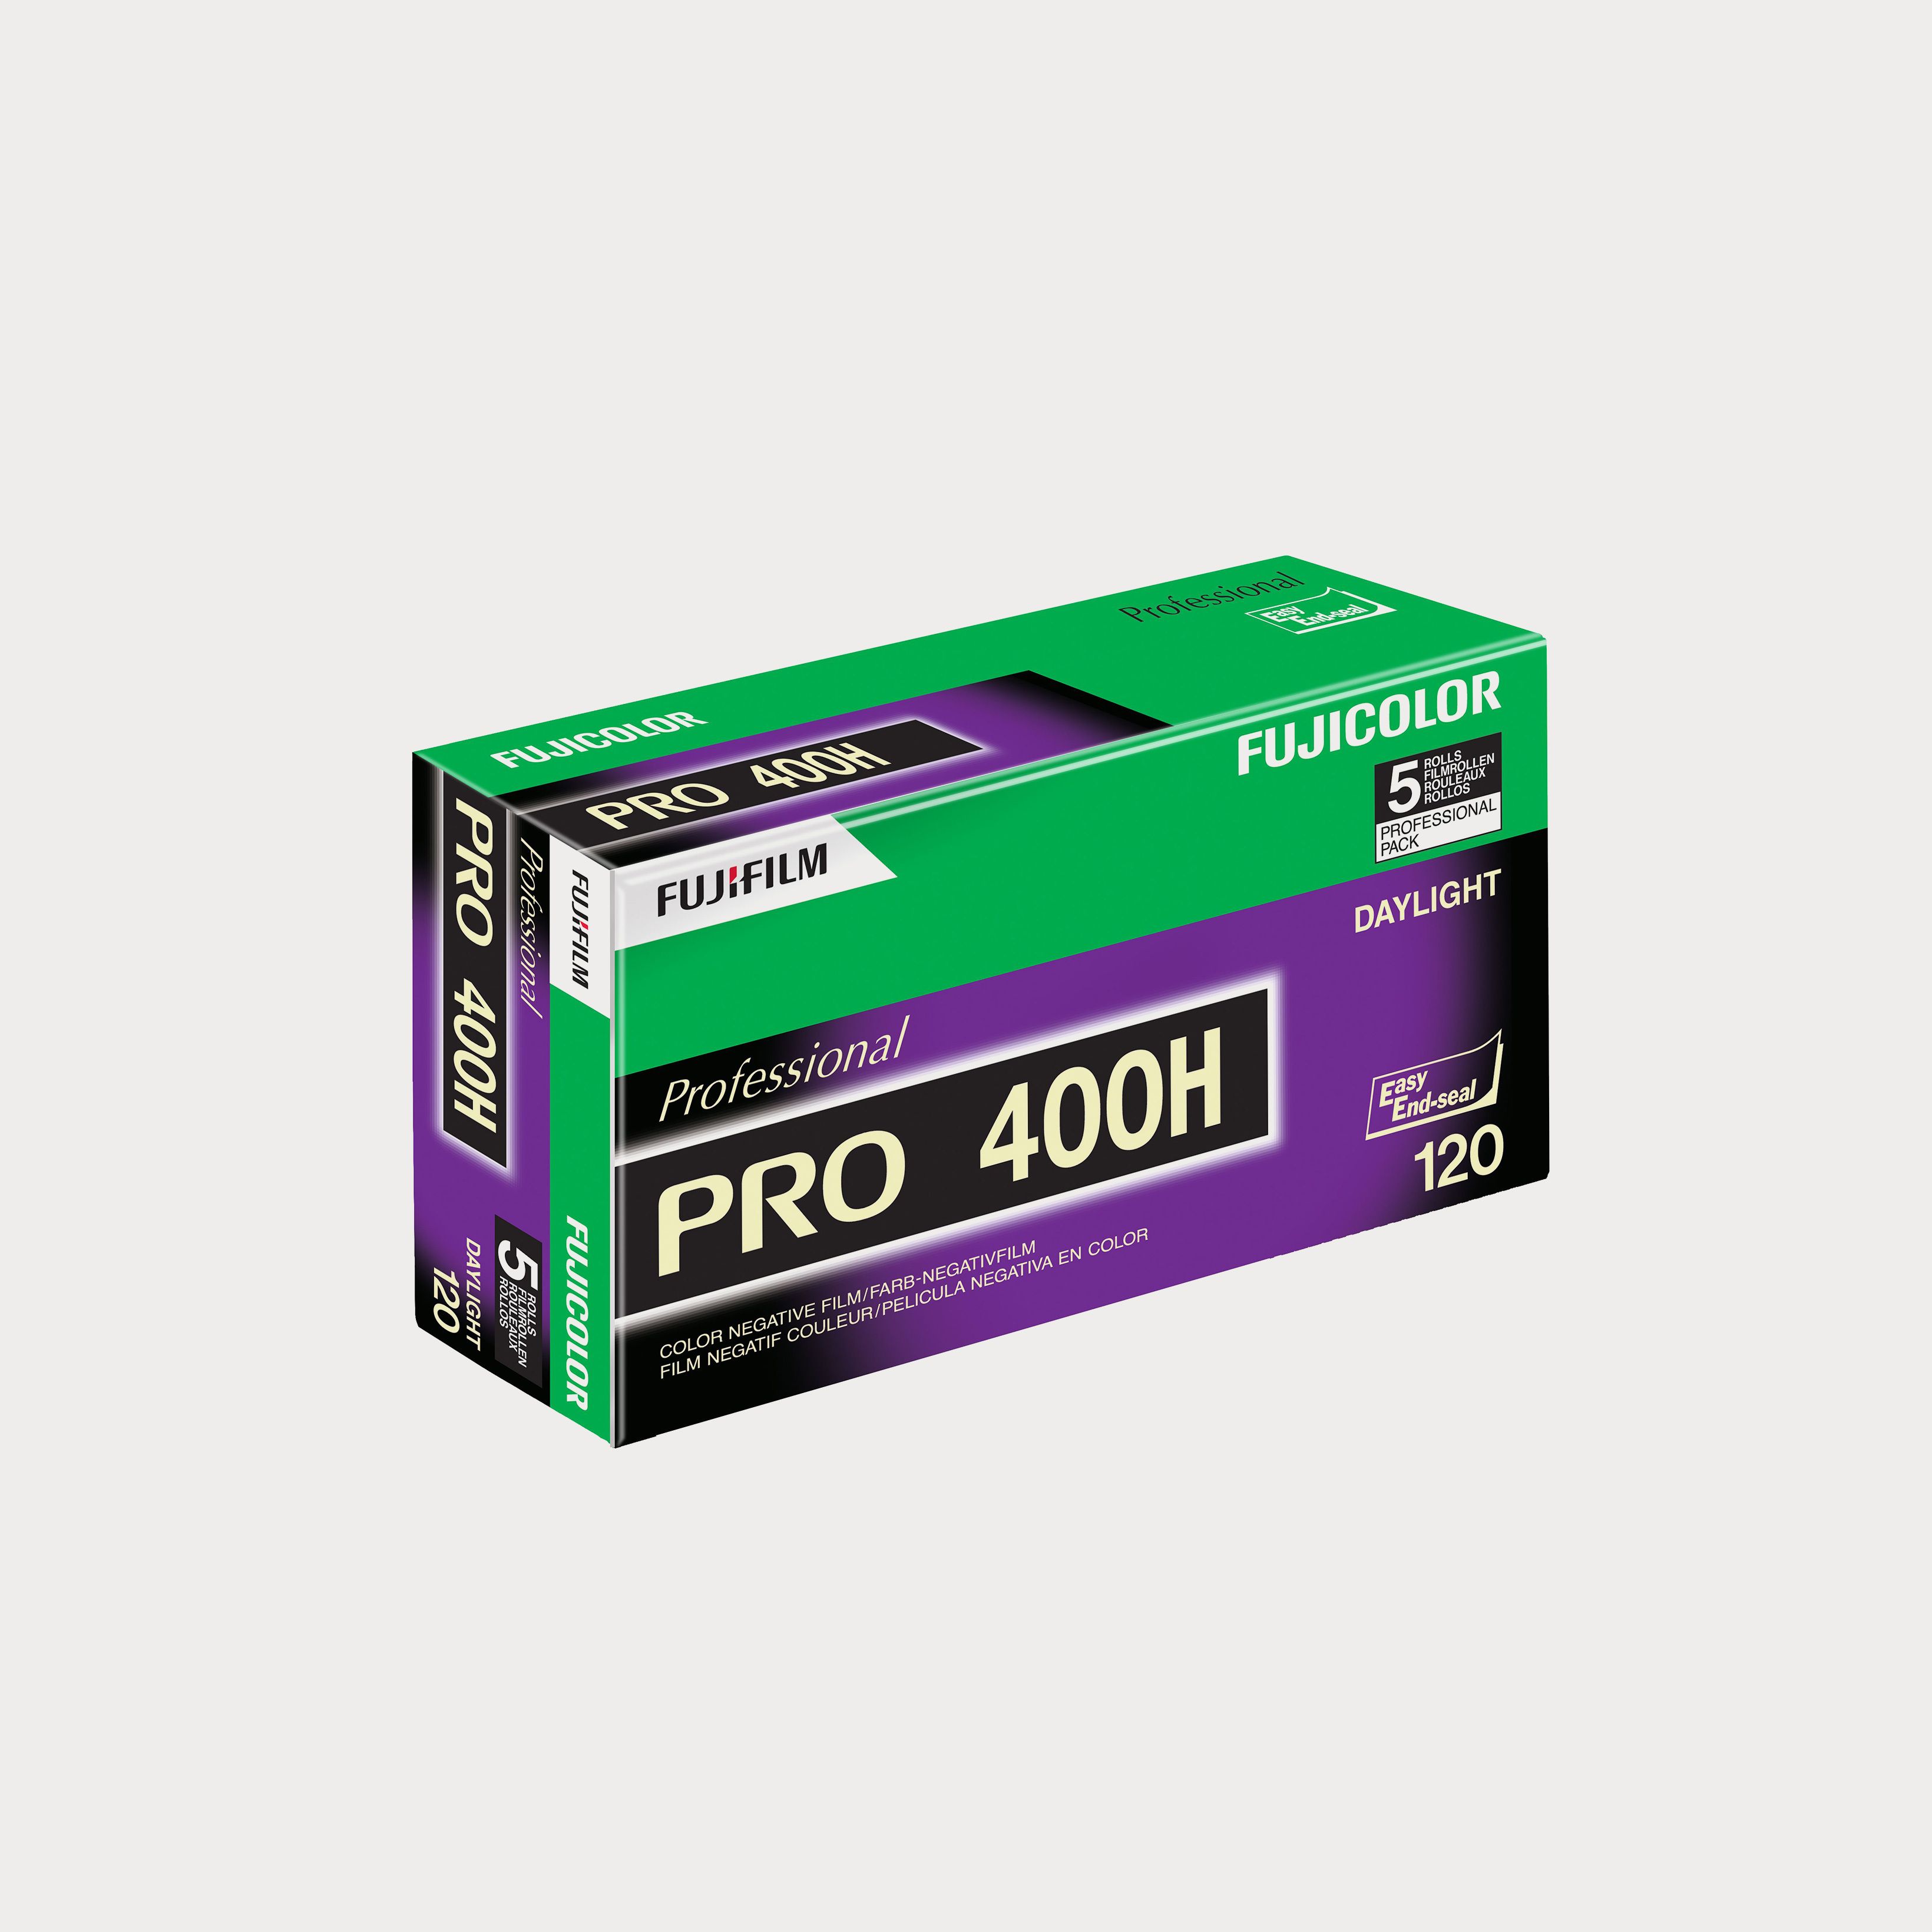 PRO 400H 120 Film - 5 Pack